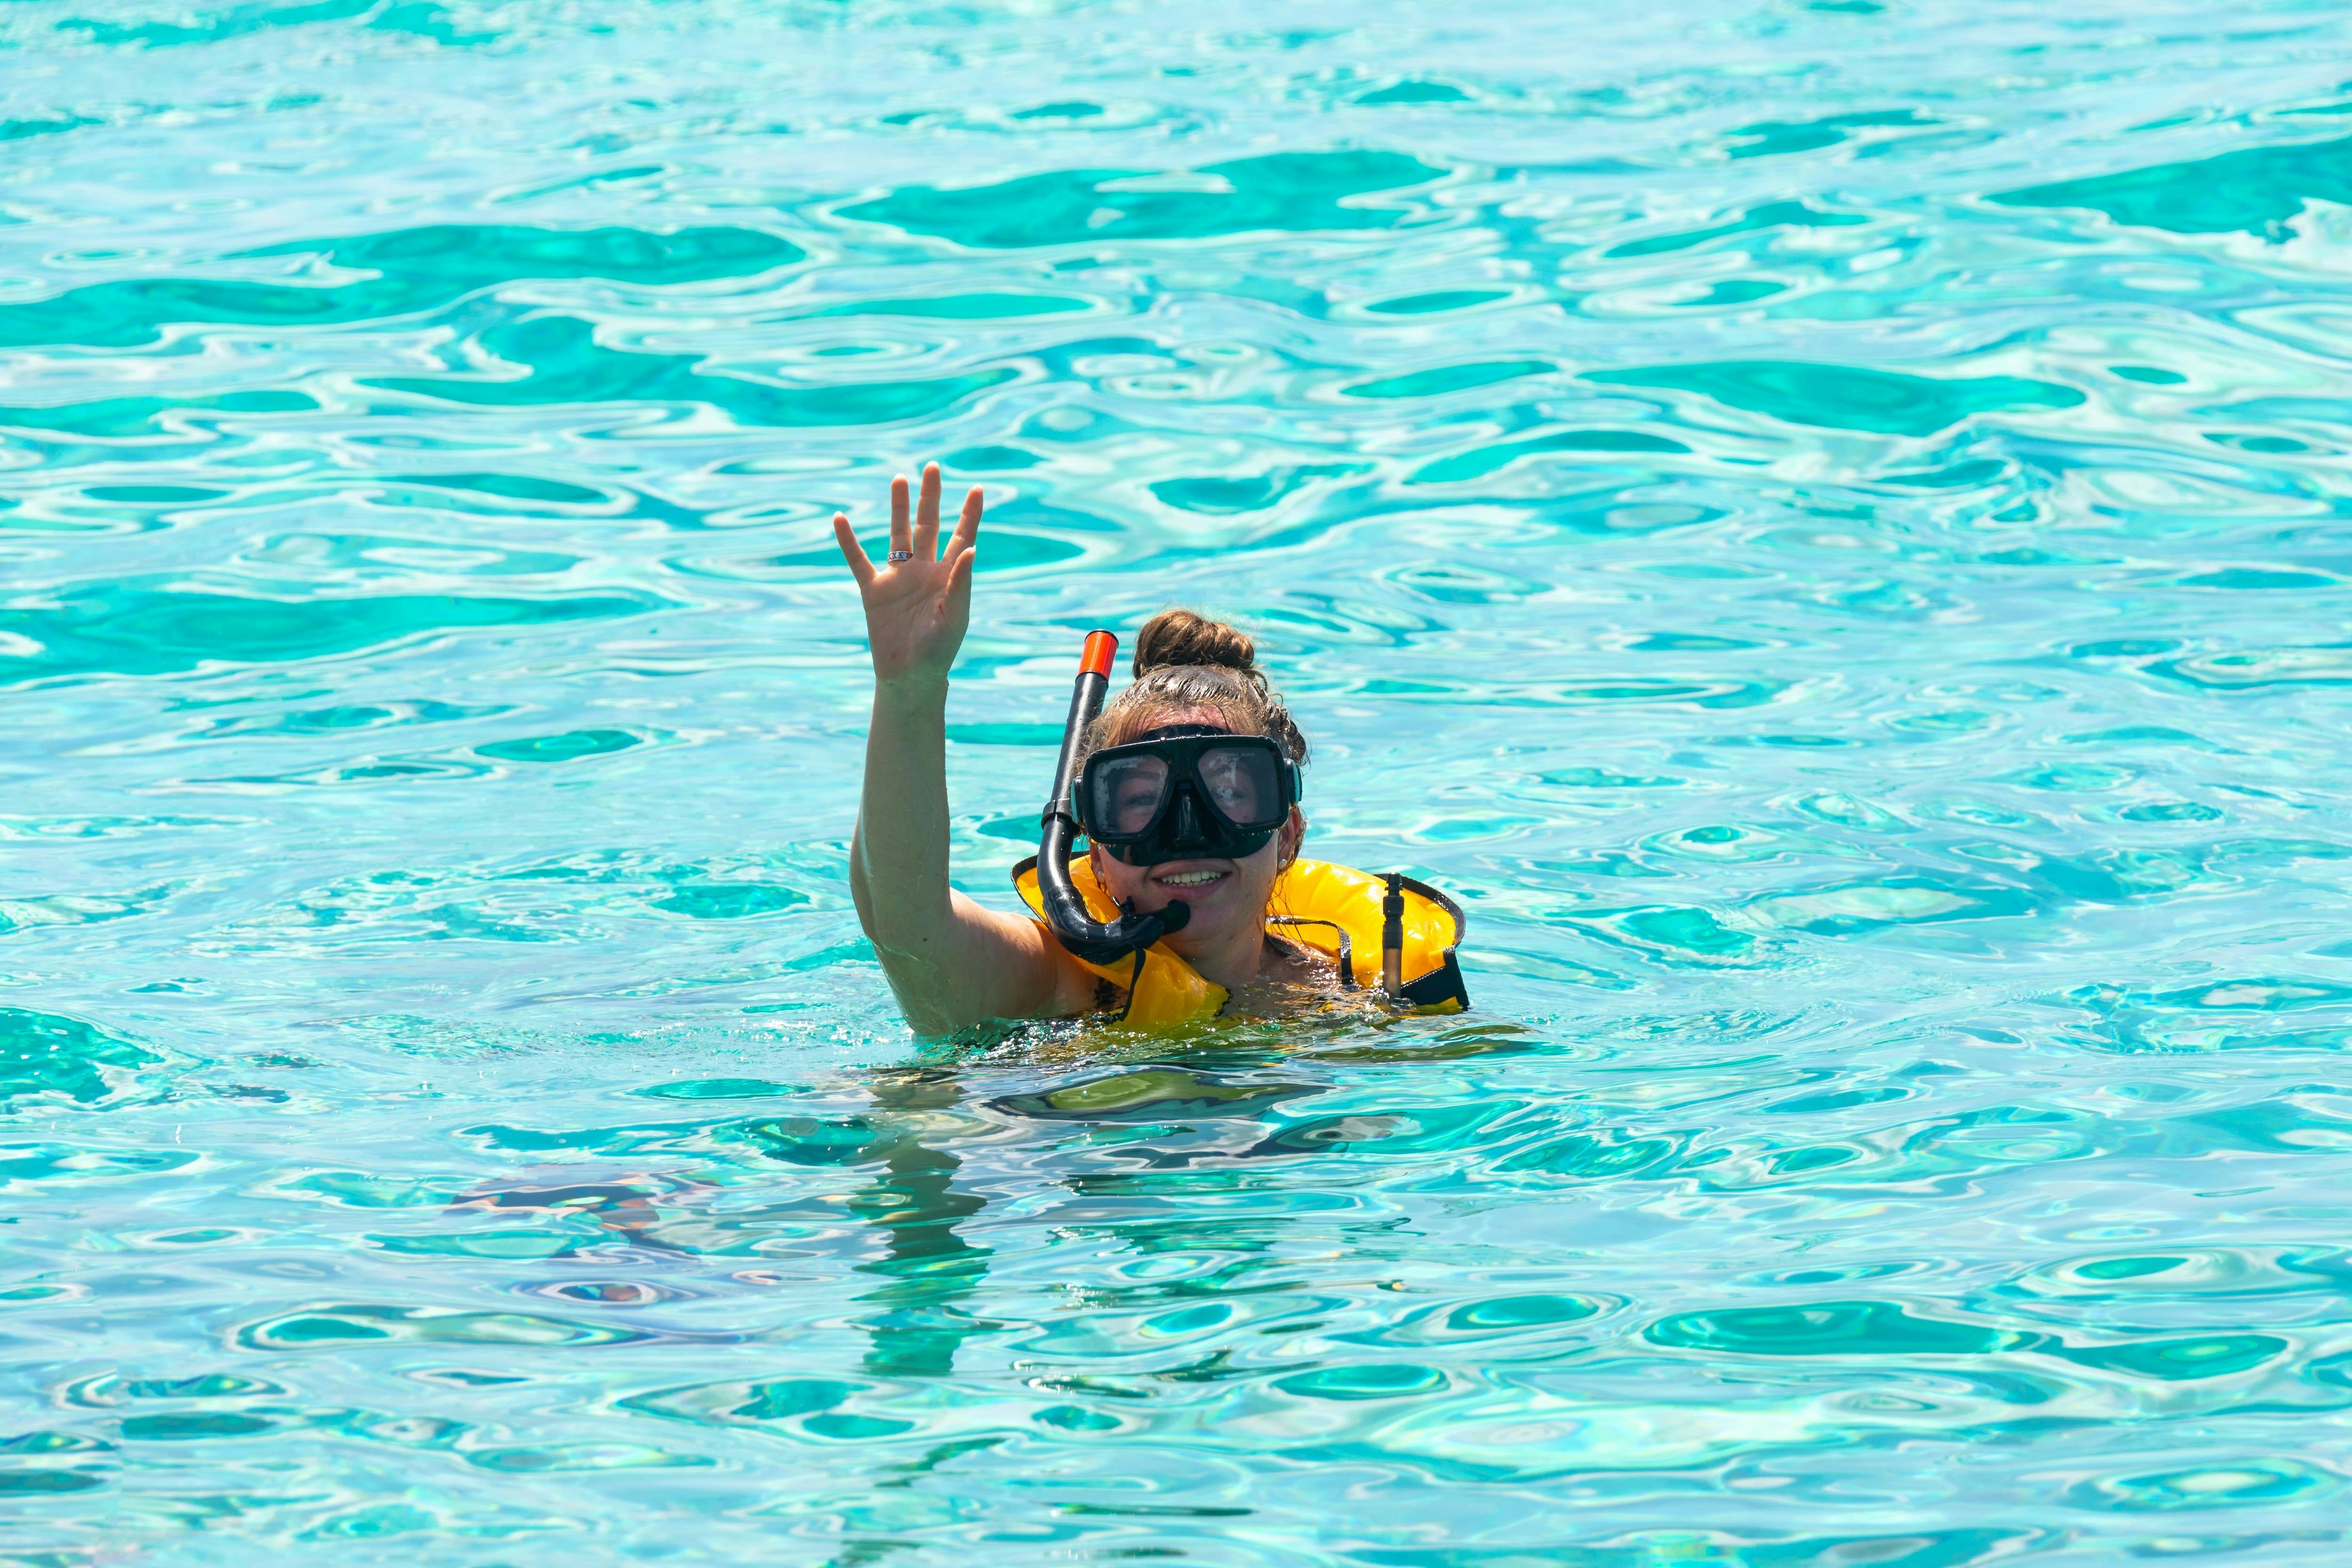 Turtle Snorkelling, Cenote Swim & Beach Club Experience